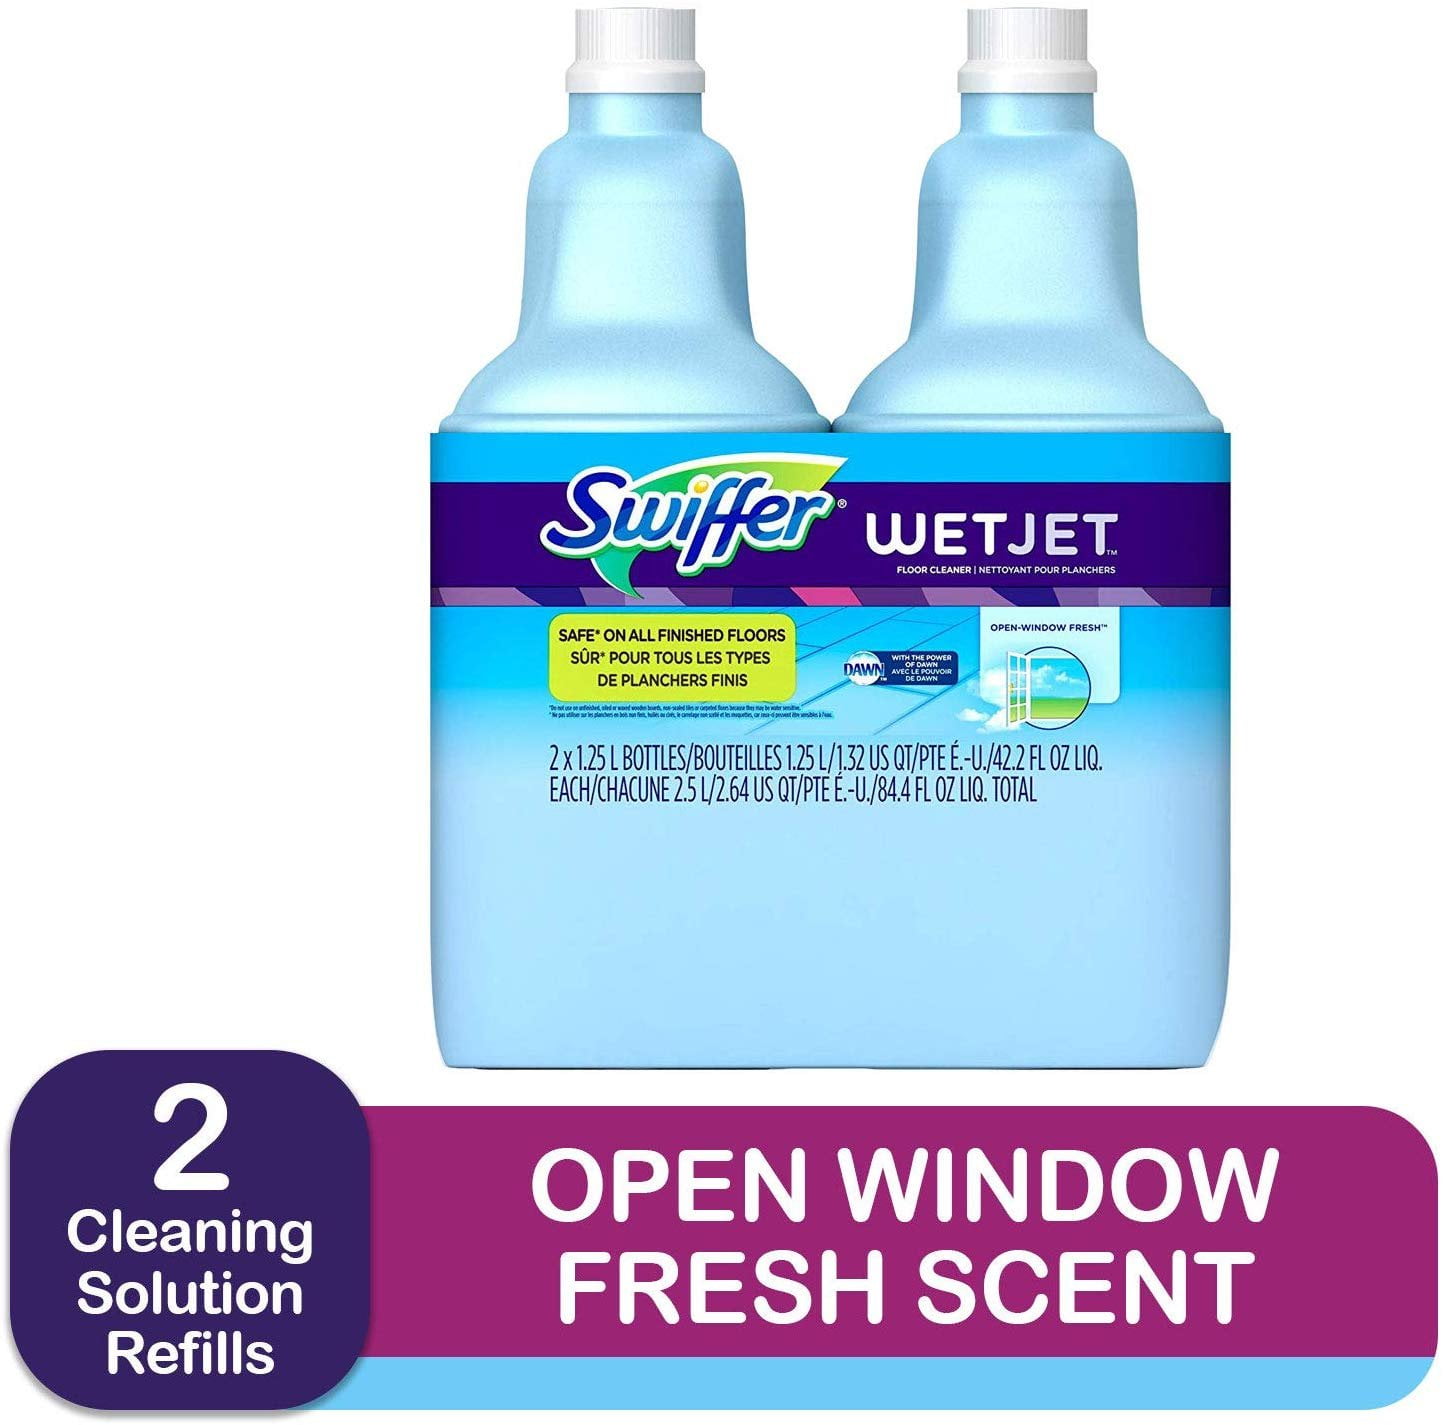 Swiffer WetJet Fresh Citrus Scent Spray Mop Refill, 1.25 liters